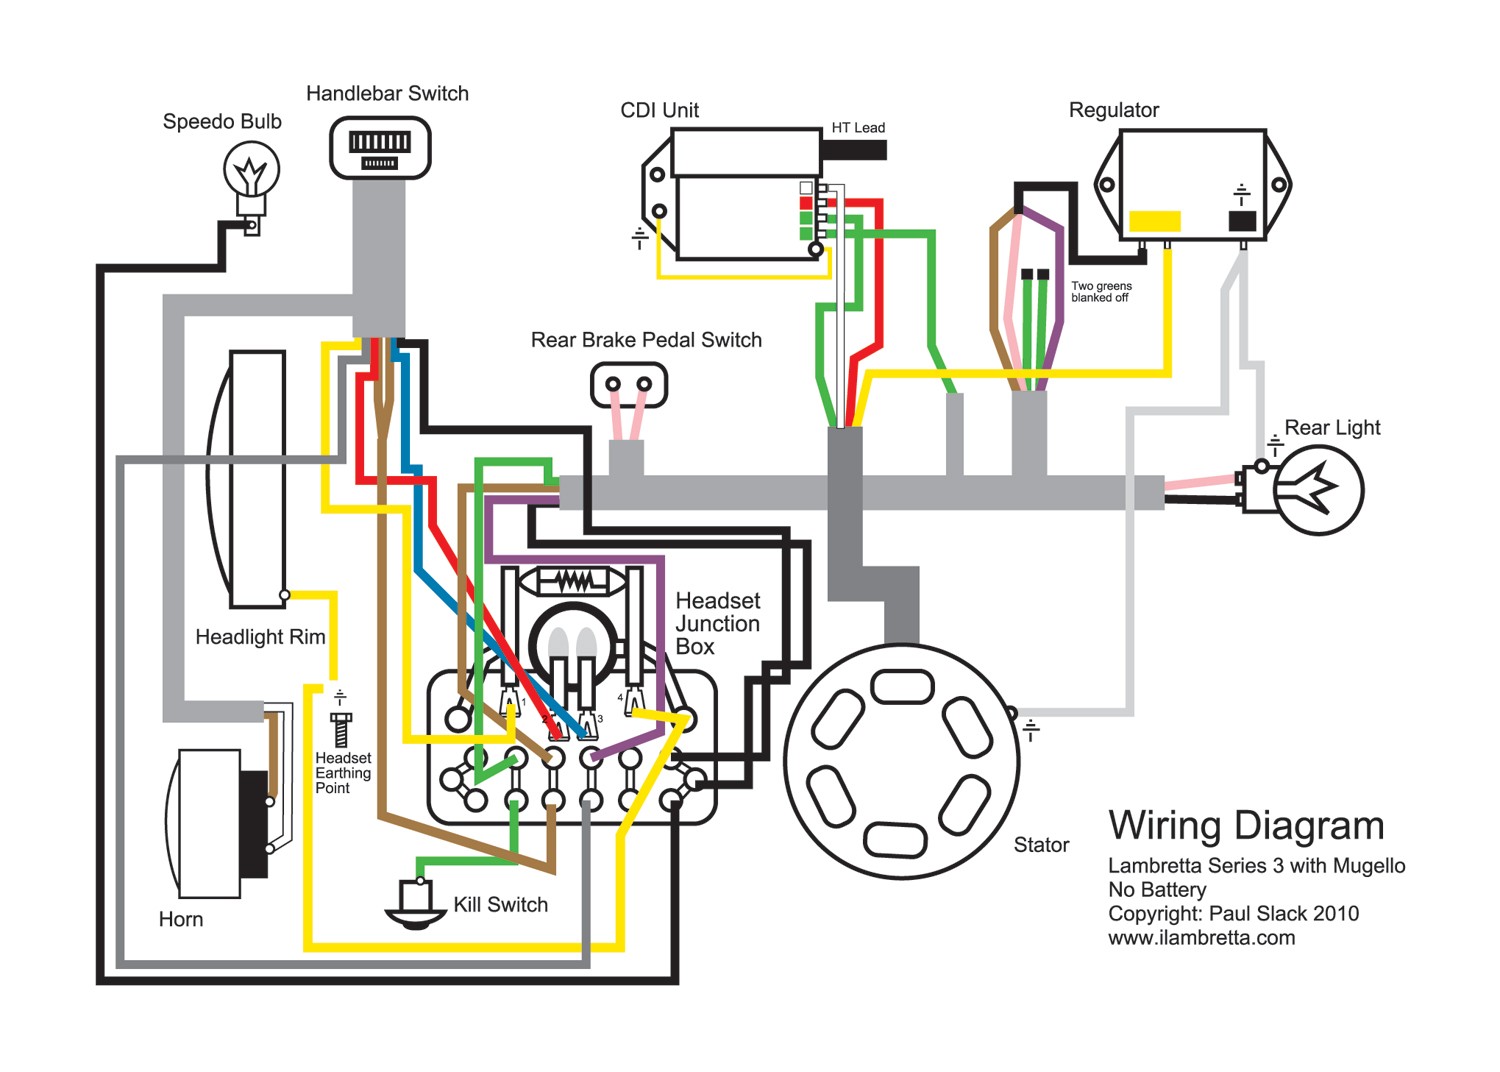 Stator Wiring Diagram Free Printable Wiring Diagrams Modern Lifan 125cc Engine Wiring Image Collection Electrical